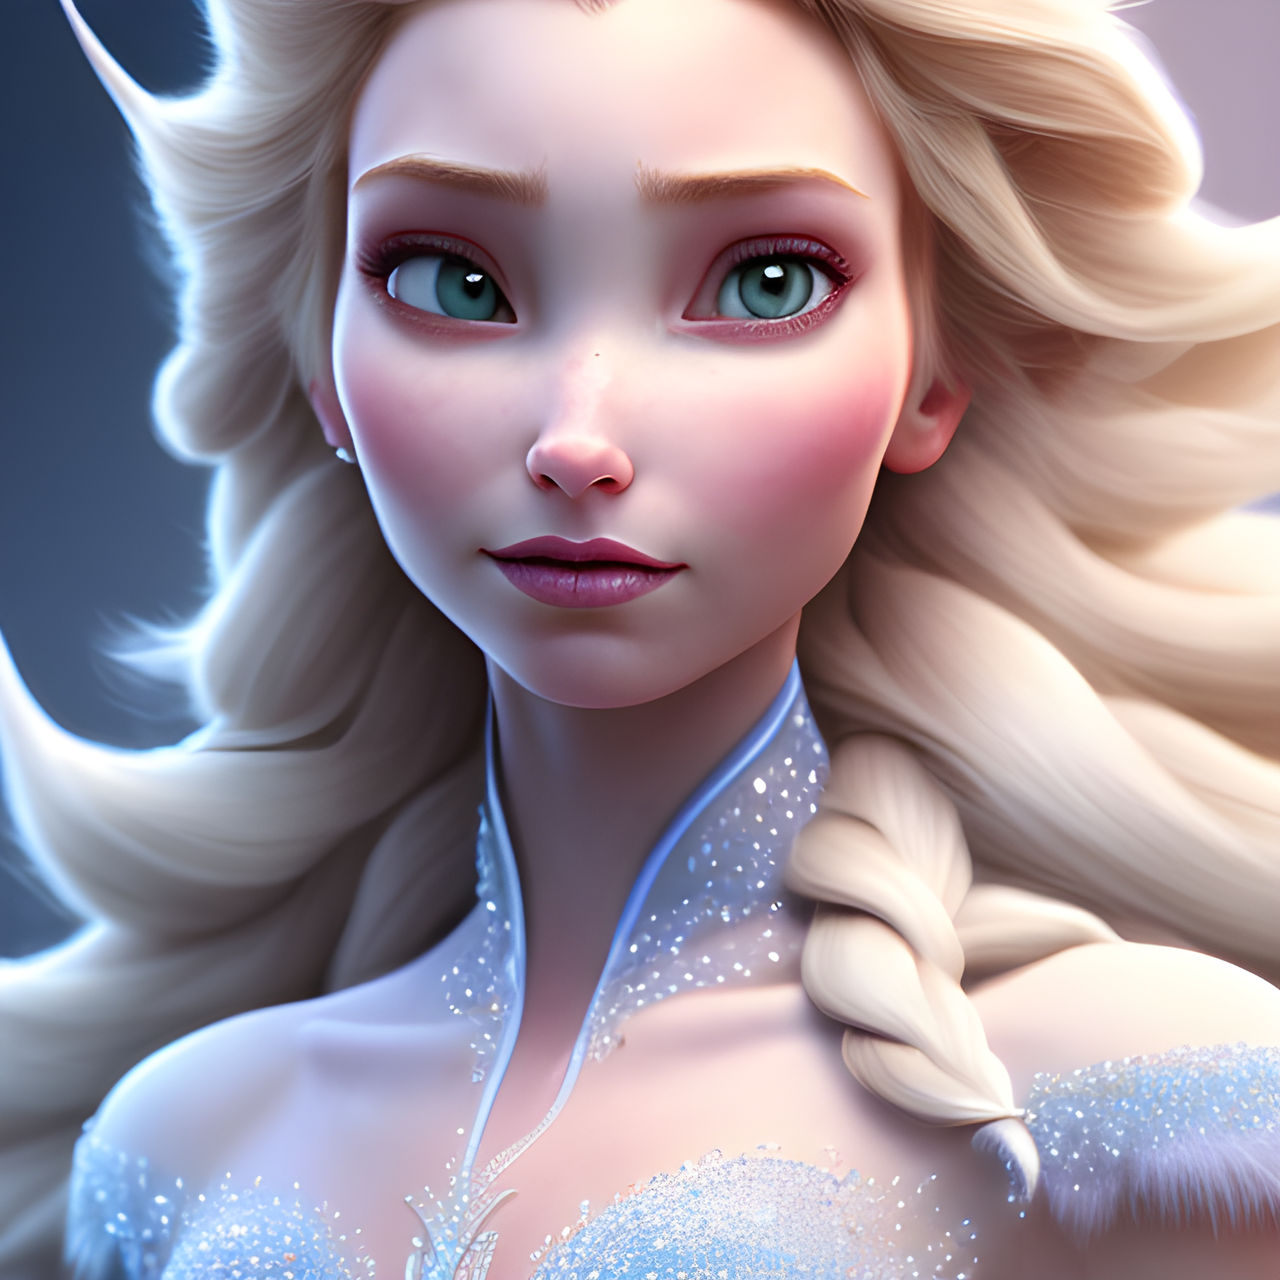 Frozen Elsa Concept by chrispineworthy on DeviantArt